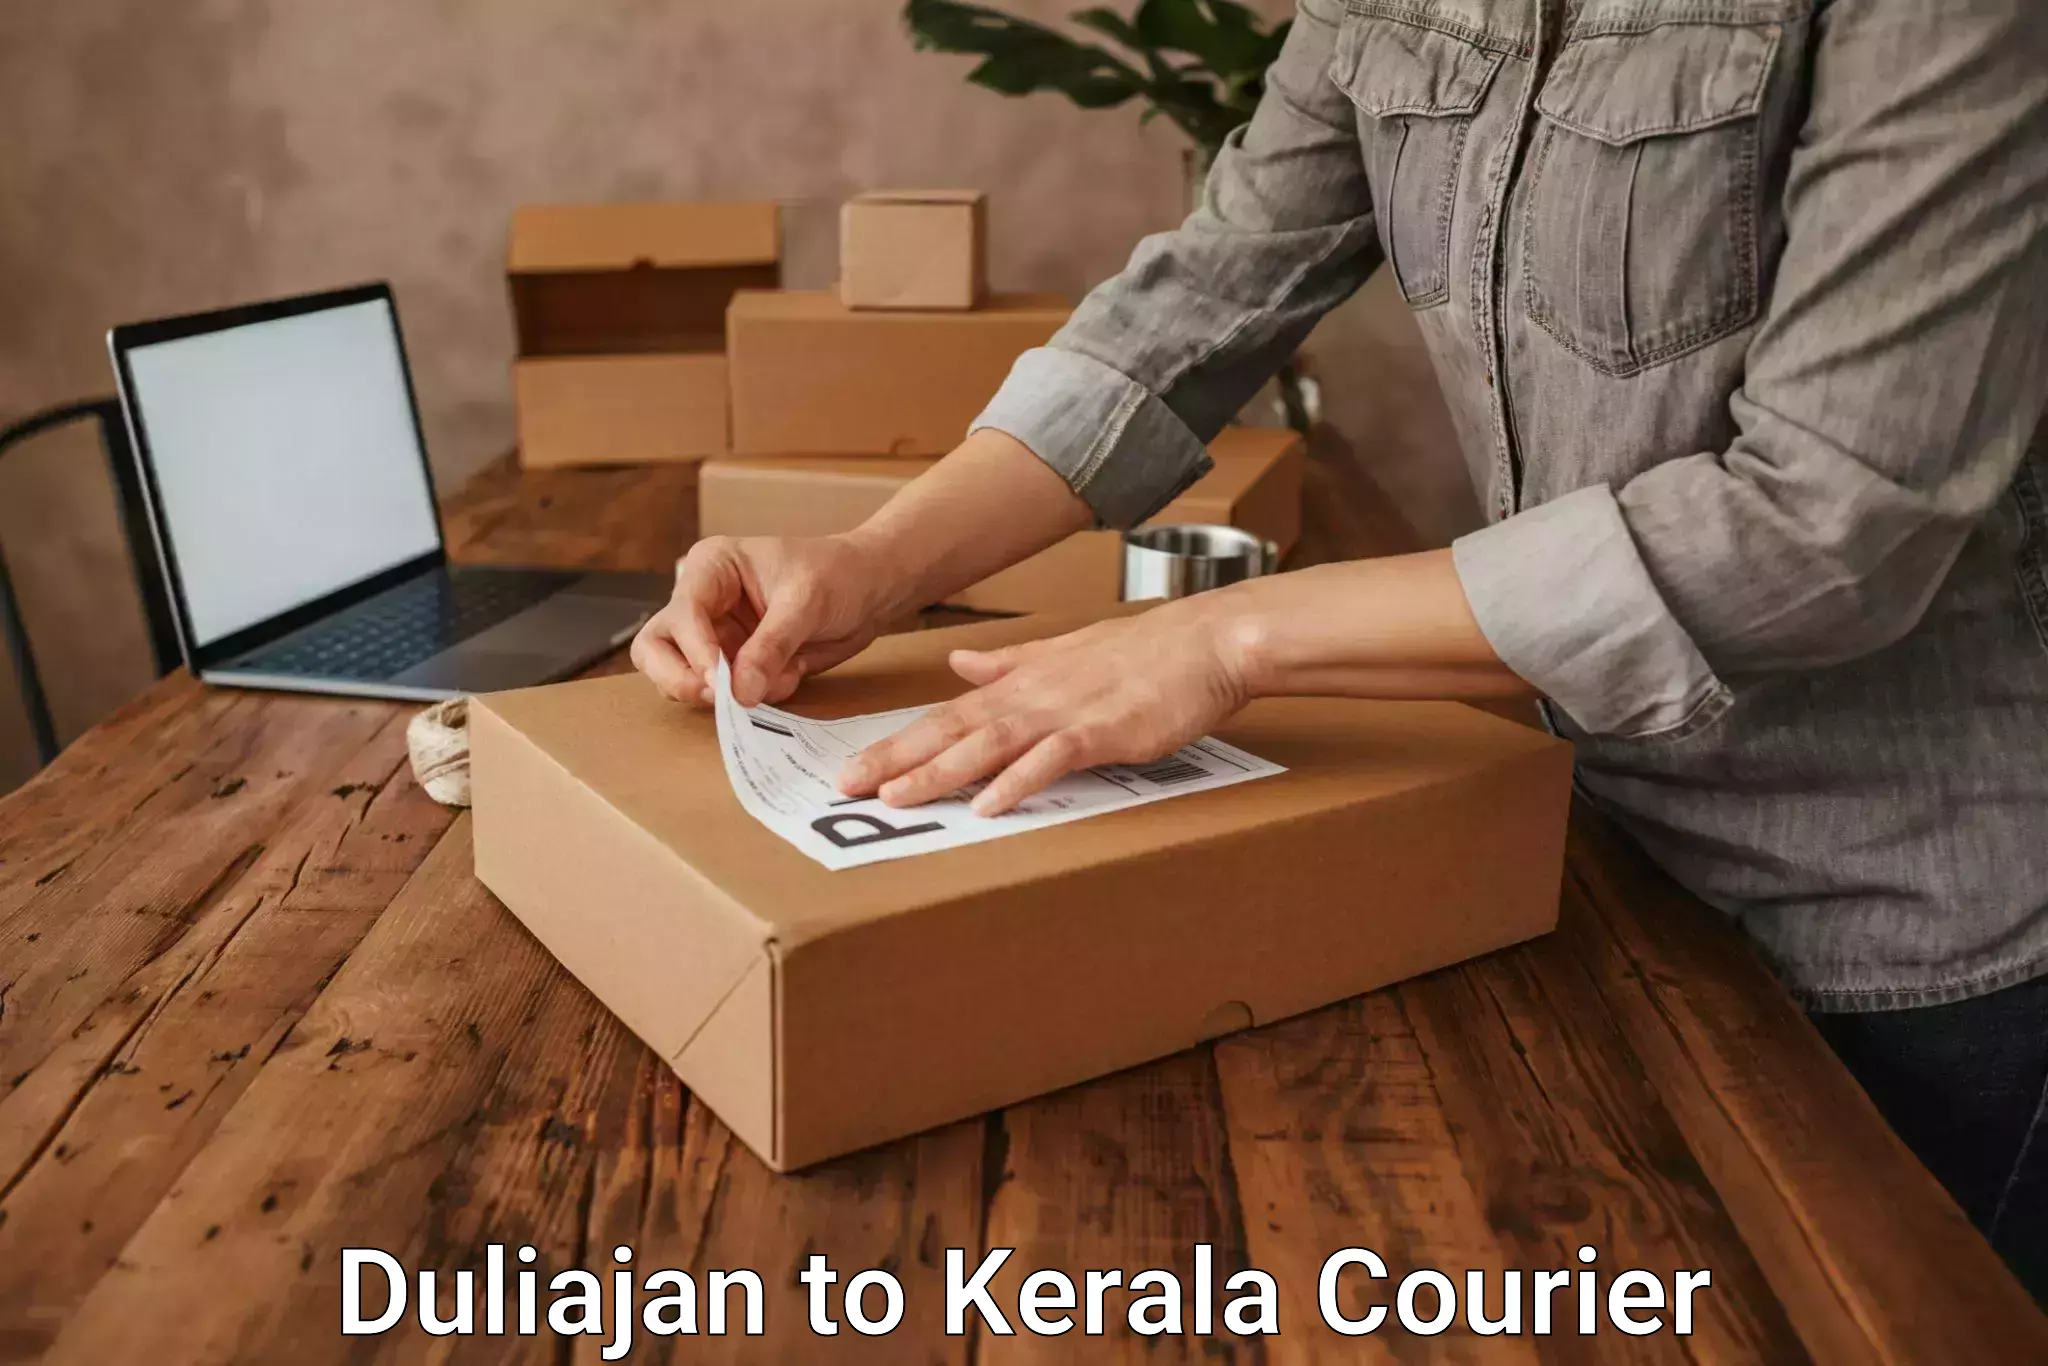 High-capacity parcel service Duliajan to Trivandrum